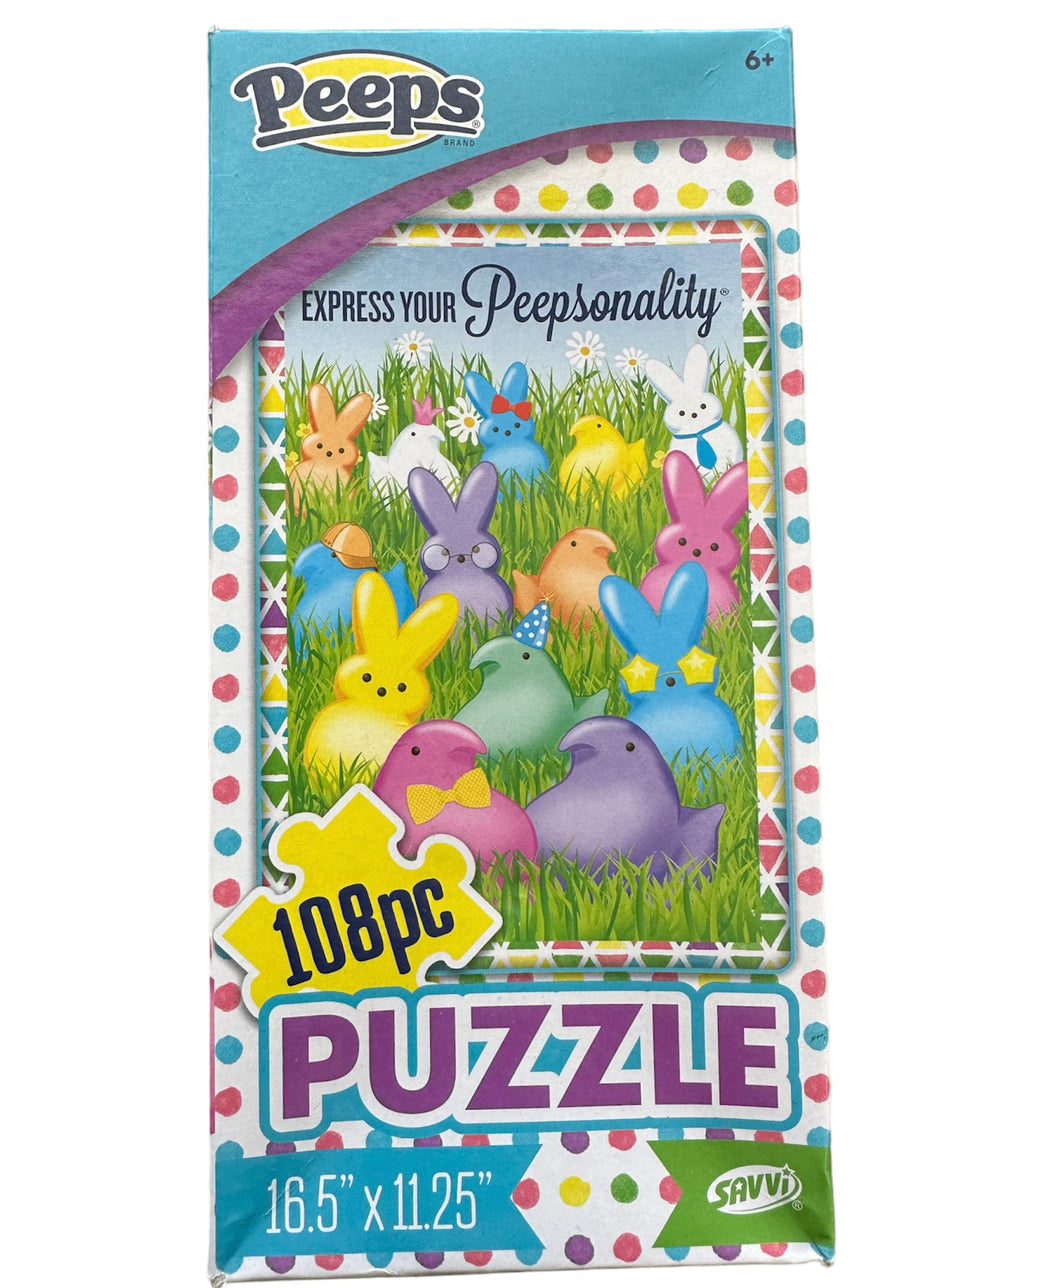 Peeps Puzzle 108 pieces